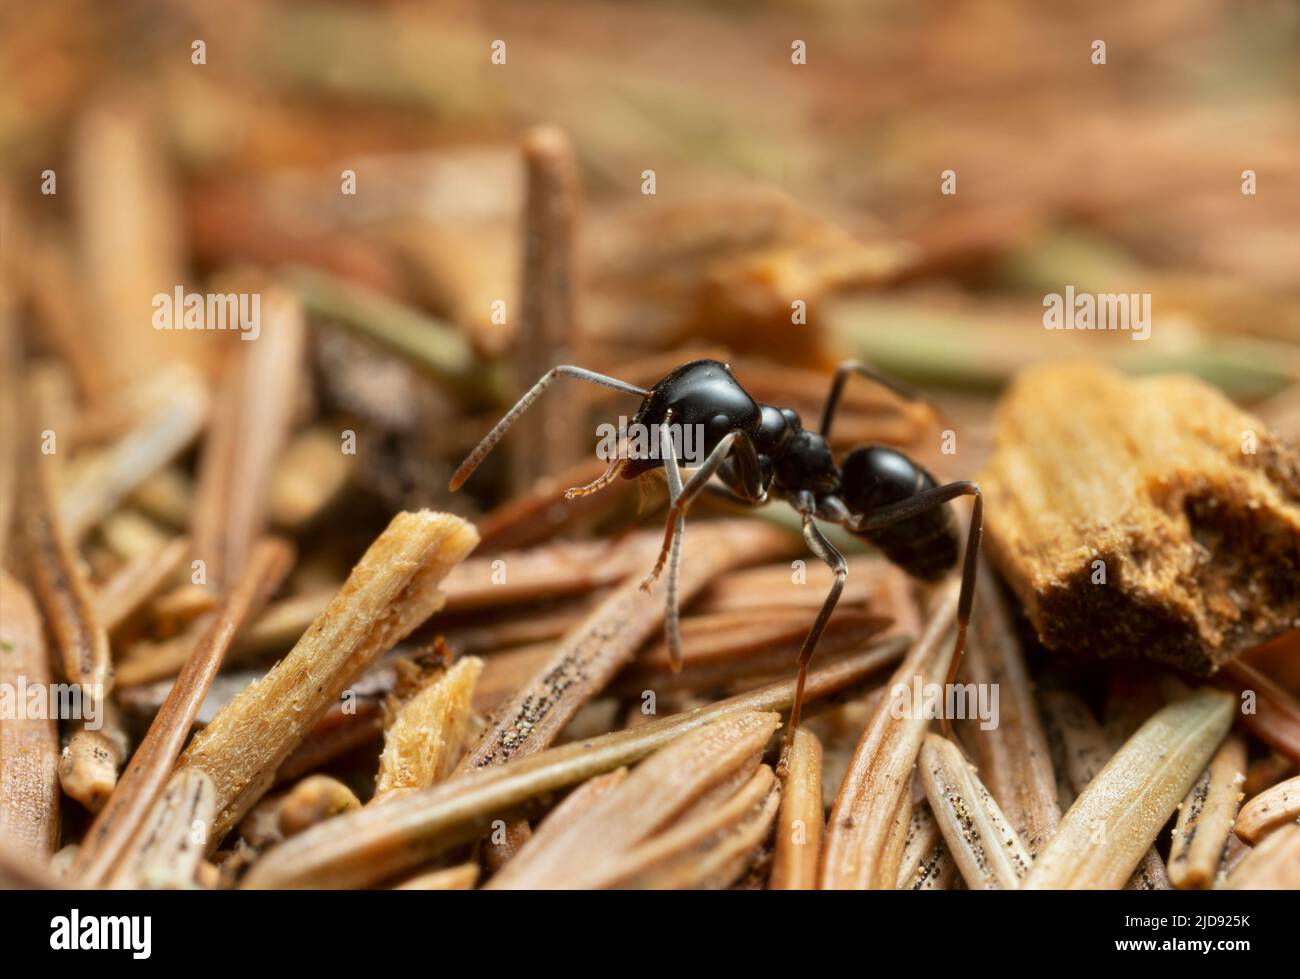 Jet black ant, Lasius fuliginosus among pine needles, macro photo Stock Photo